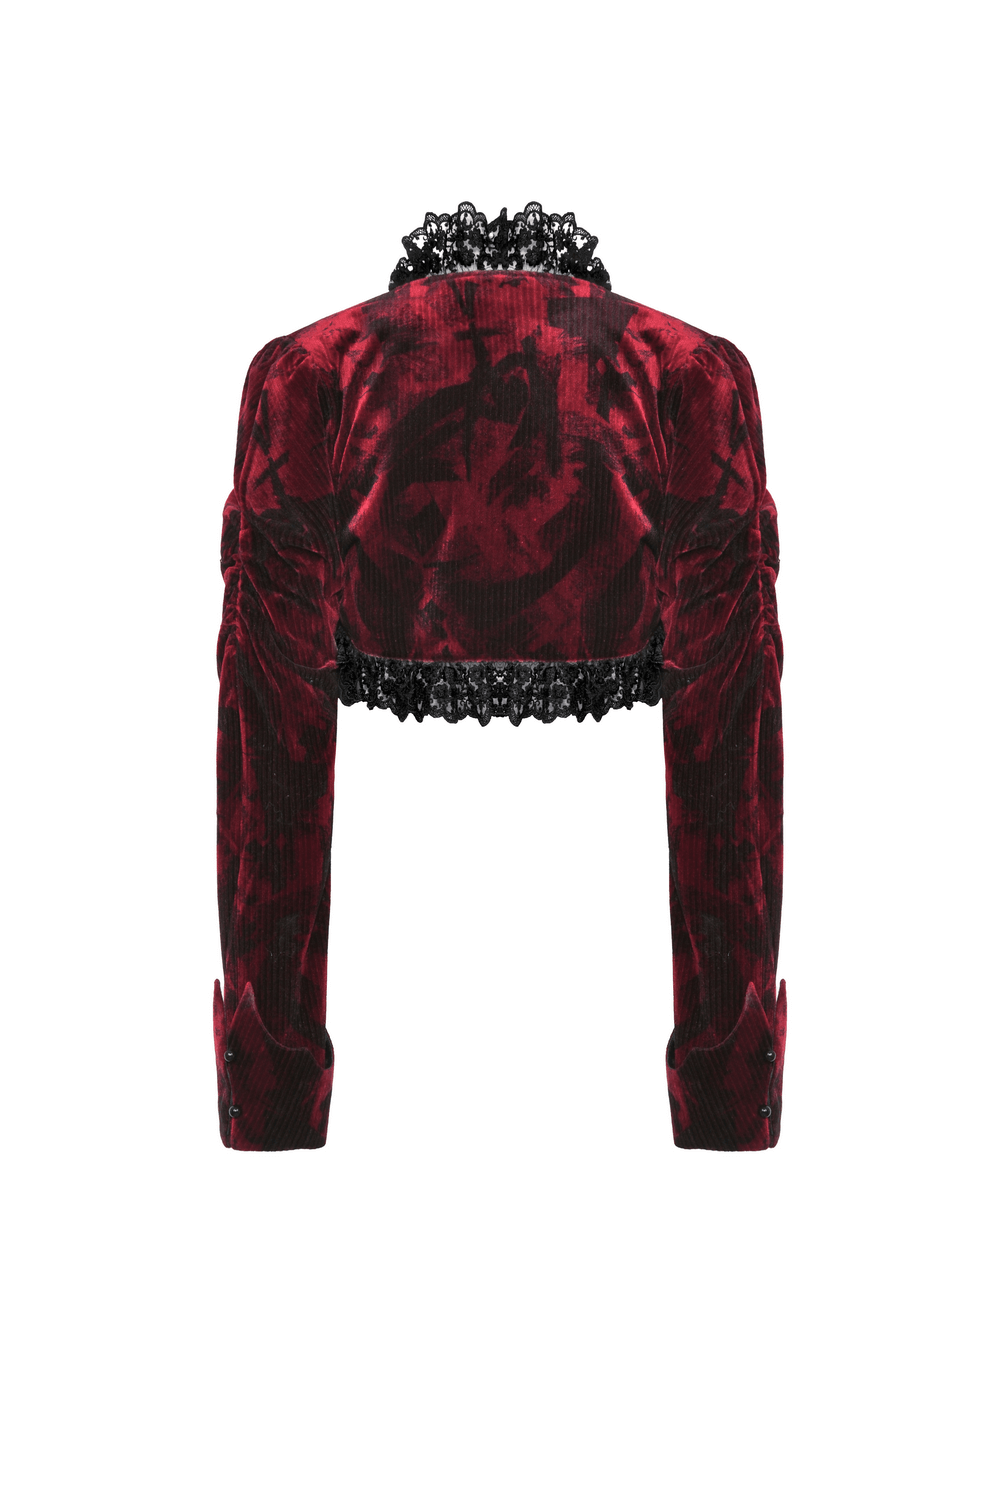 Elegant Velvet Bolero with Black Lace Detailing